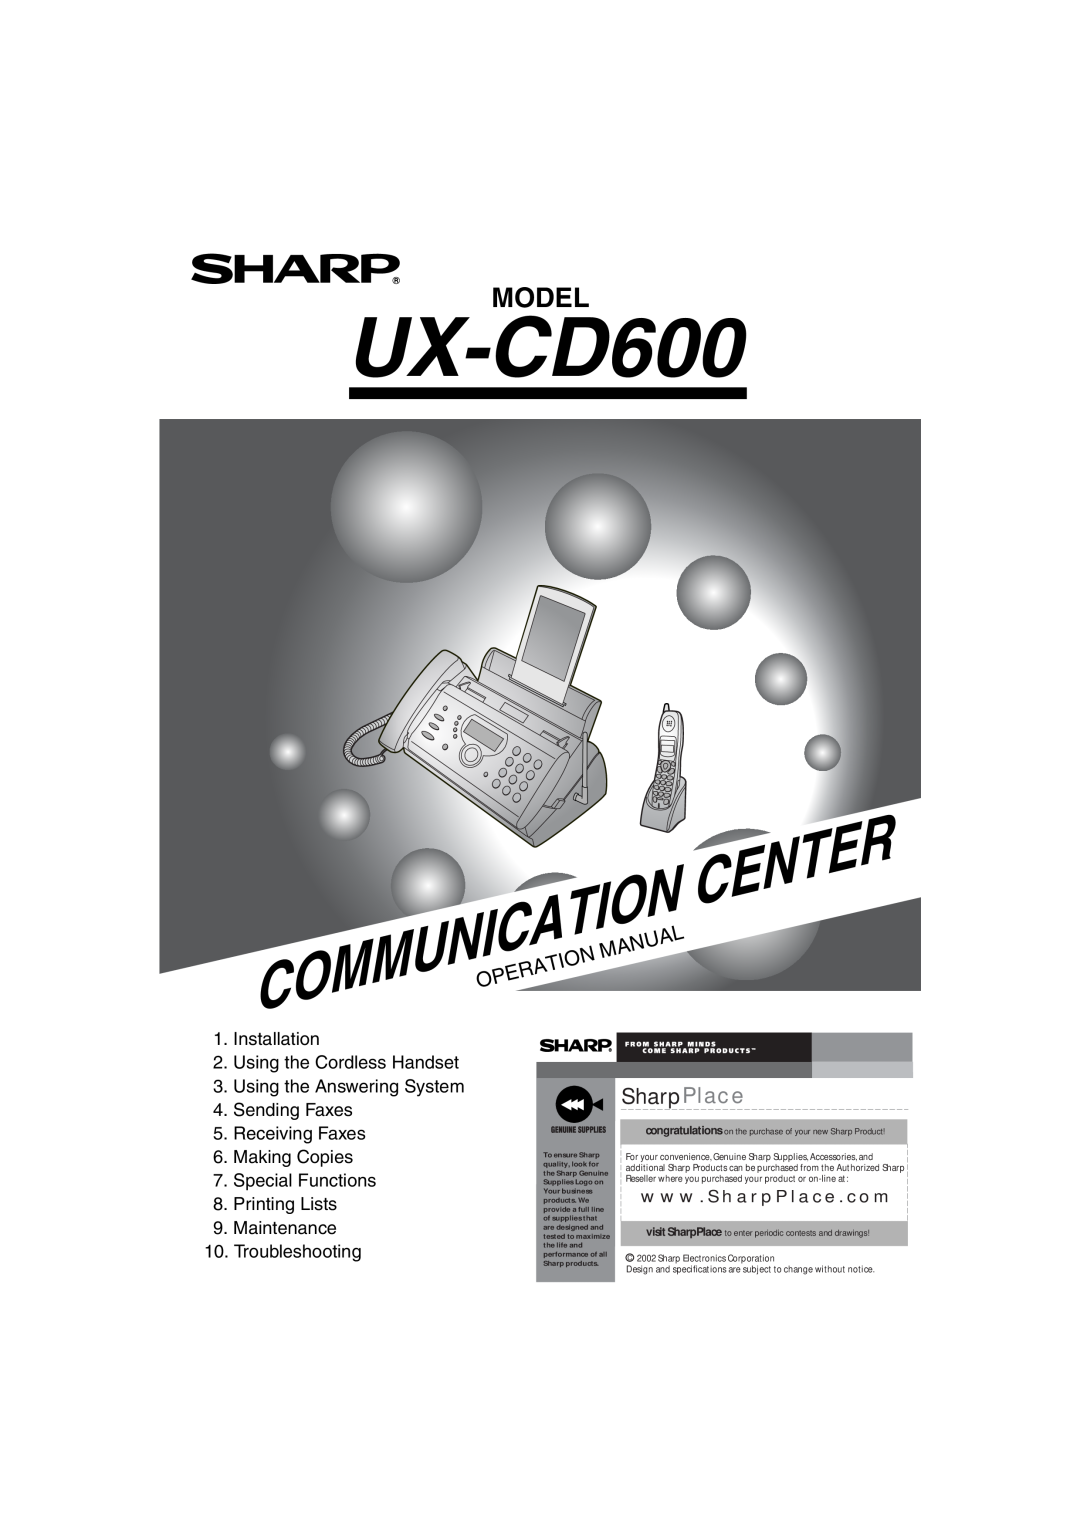 Sharp UX-CD600 operation manual Center, Model, SharpPlace, Communicationoperation Manual 